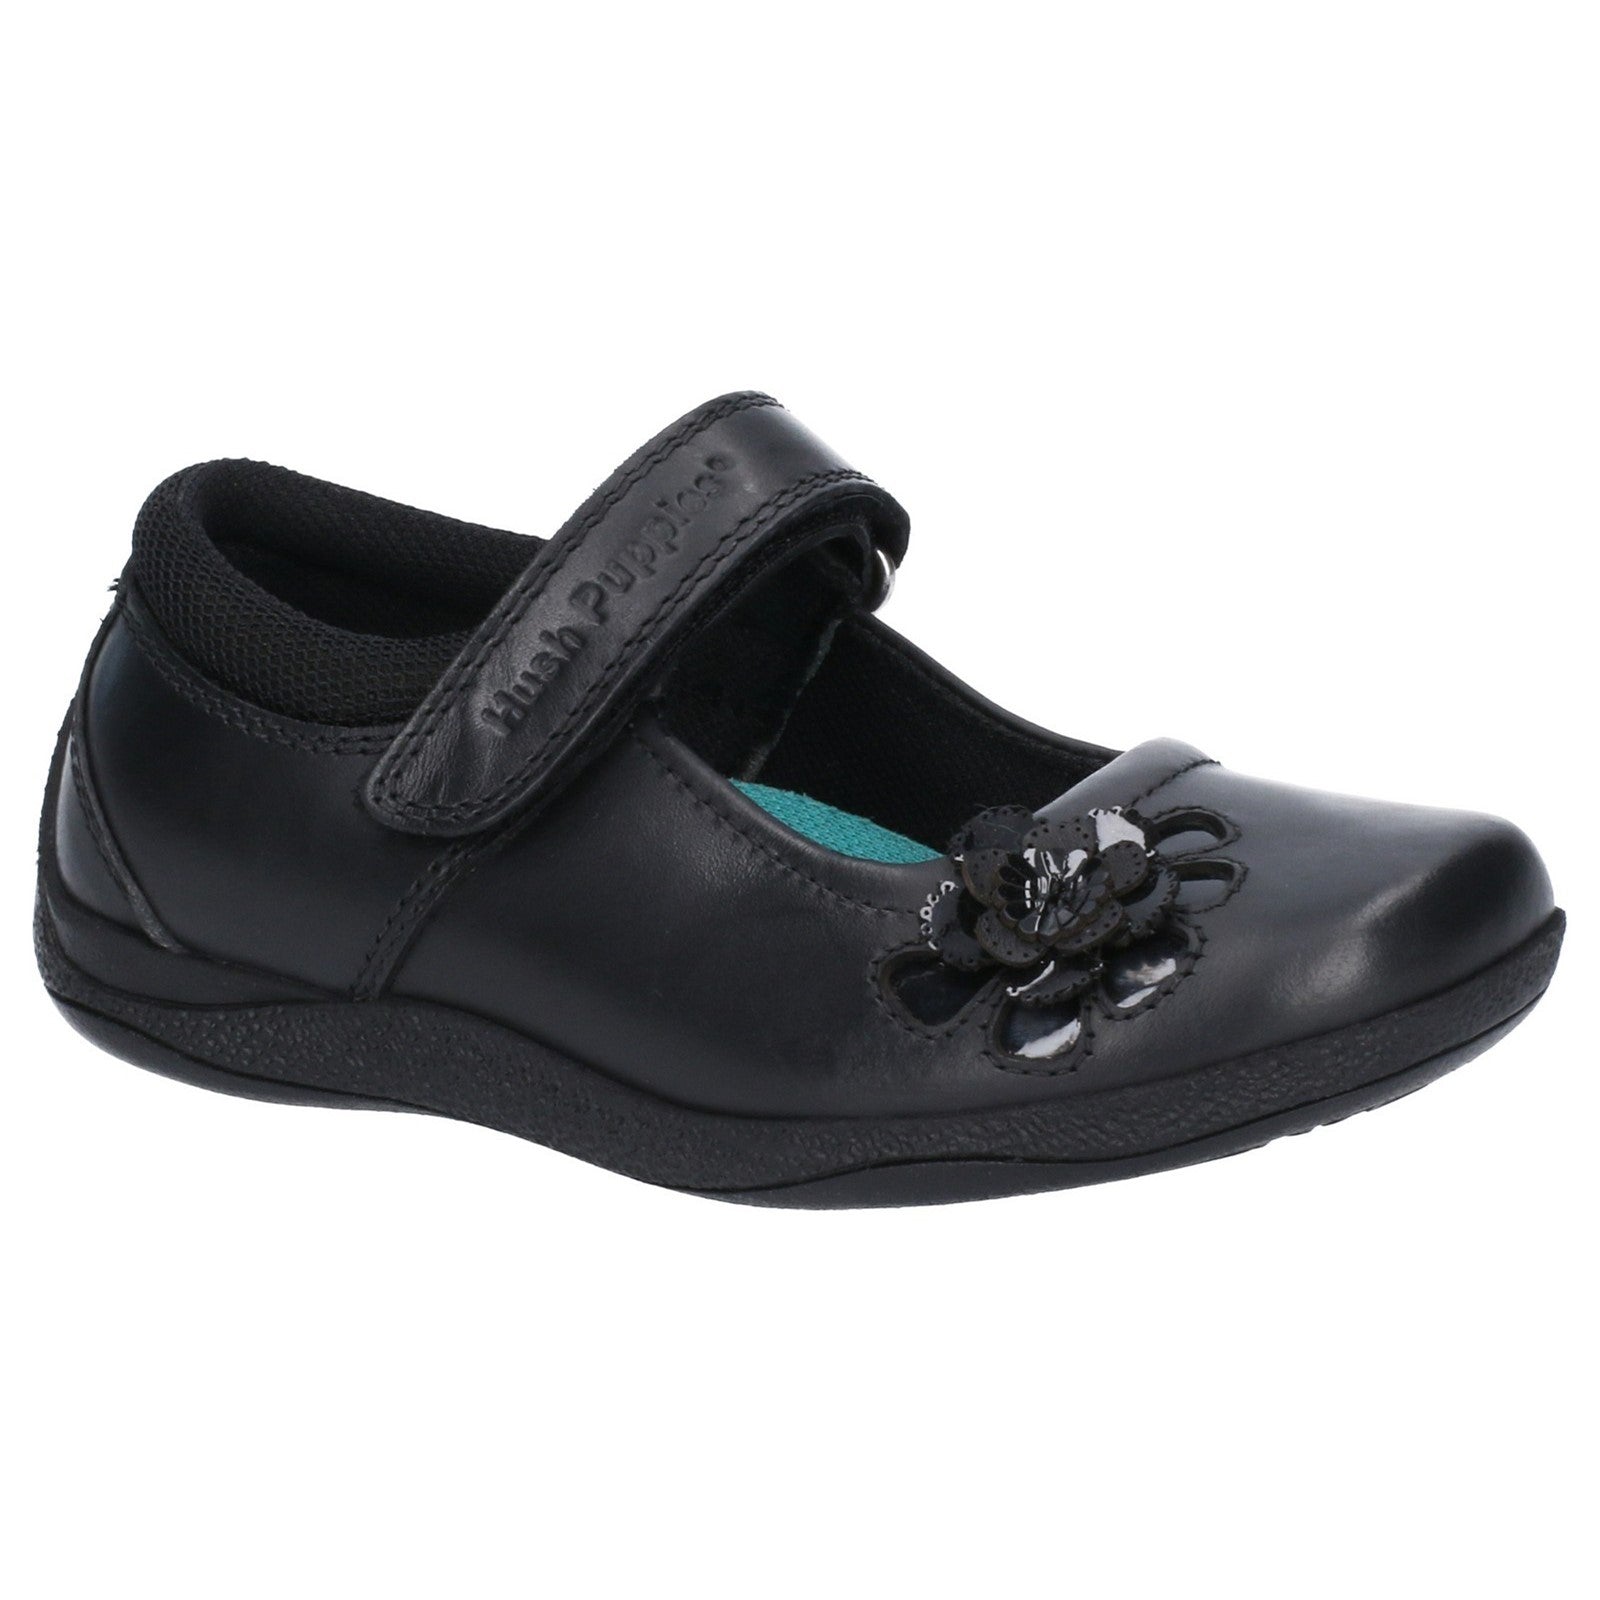 Hush Puppies Girls Jessica Leather School Shoe - Black